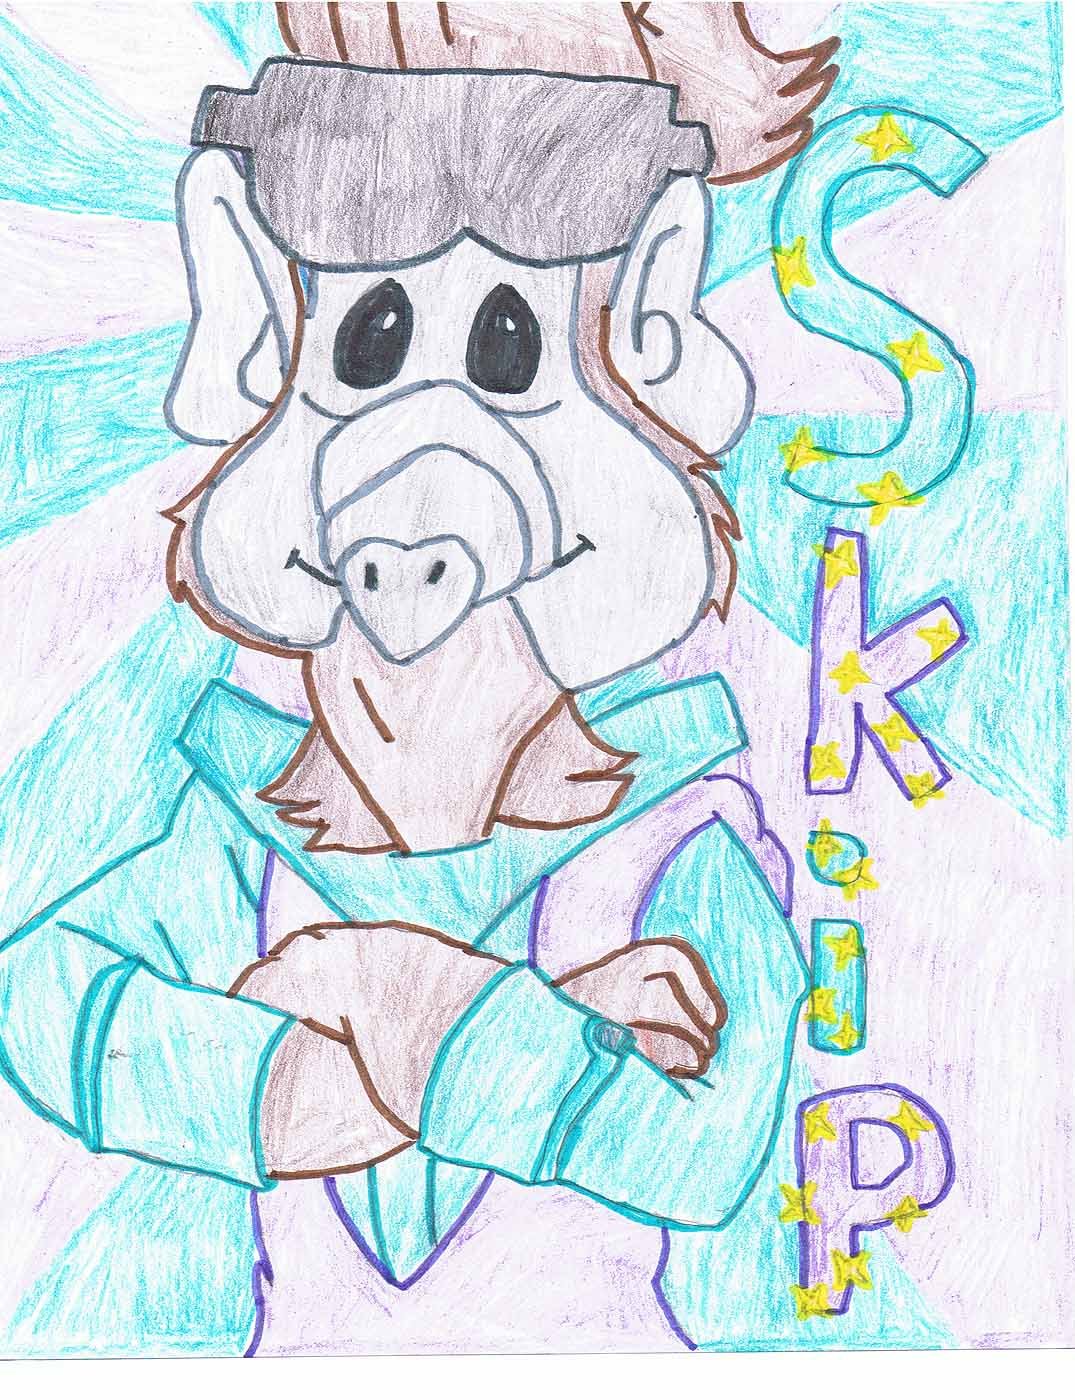 its Skip! by tennesseekidcooper5